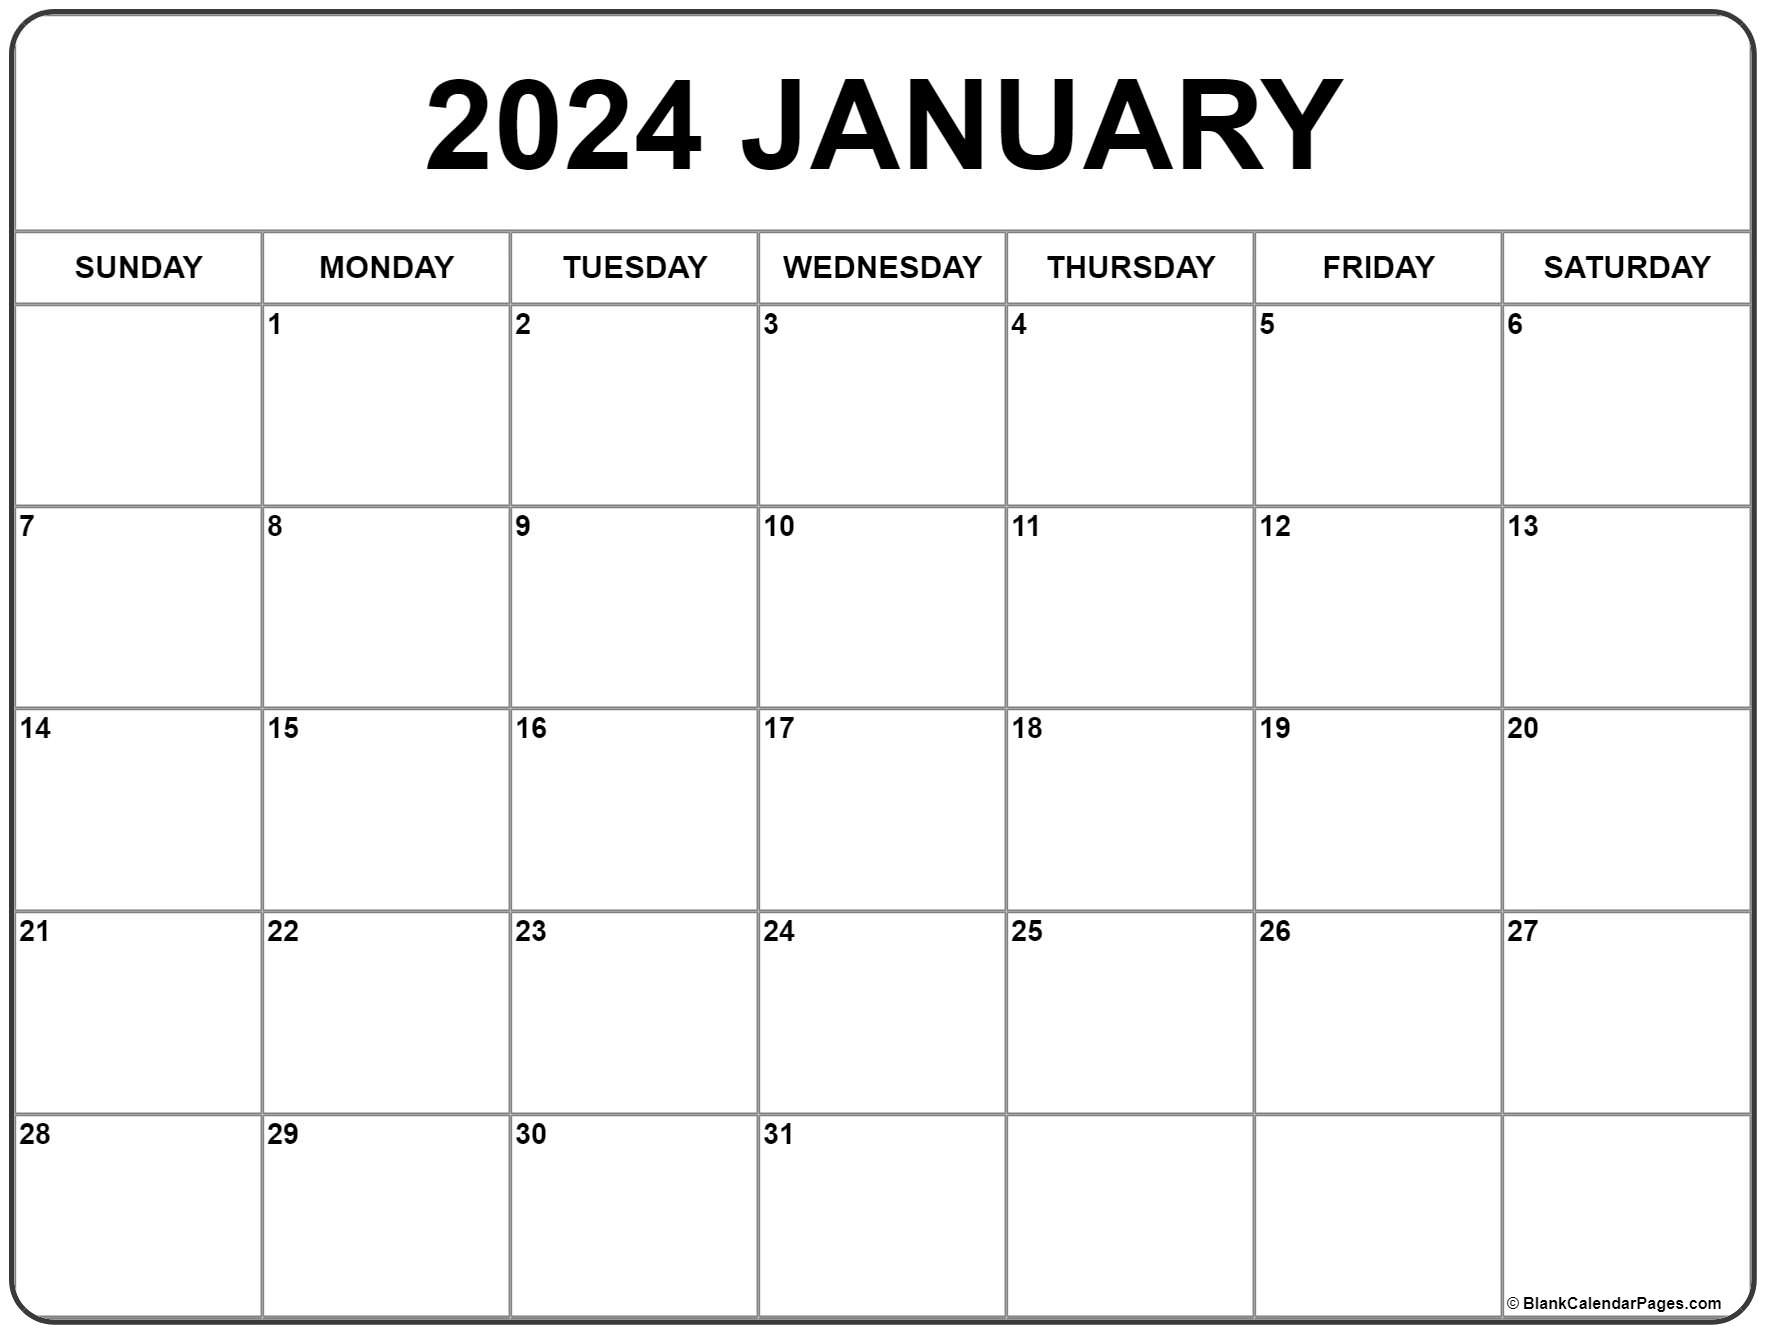 January 2024 Calendar | Free Printable Calendar for Printable January Calendar 2024 Free